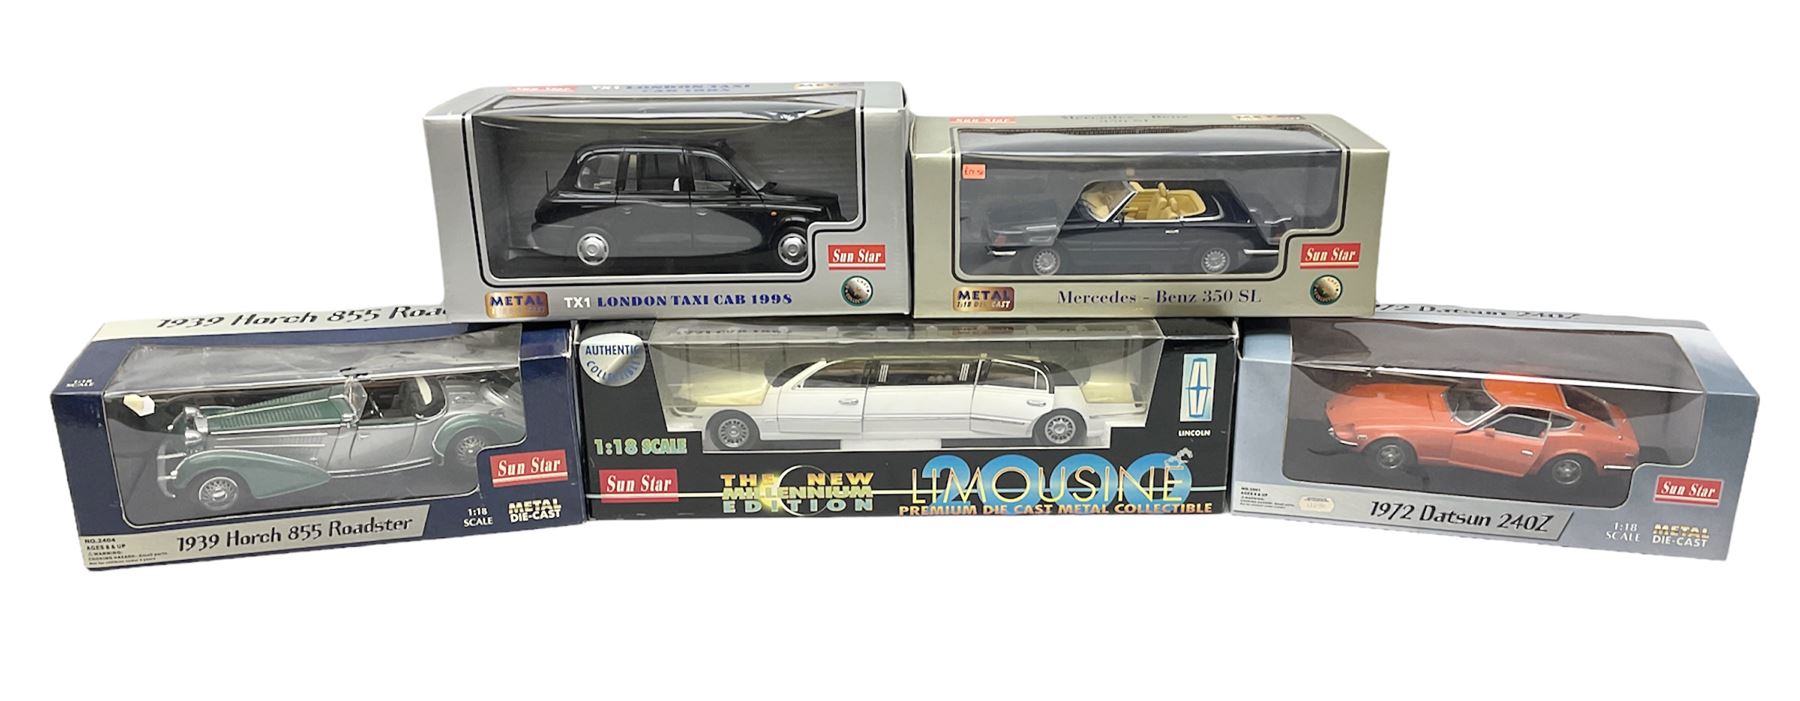 Sun Star - five 1:18 scale die-cast models comprising Ford Lincoln 2000 Limousine Millenium Edition;